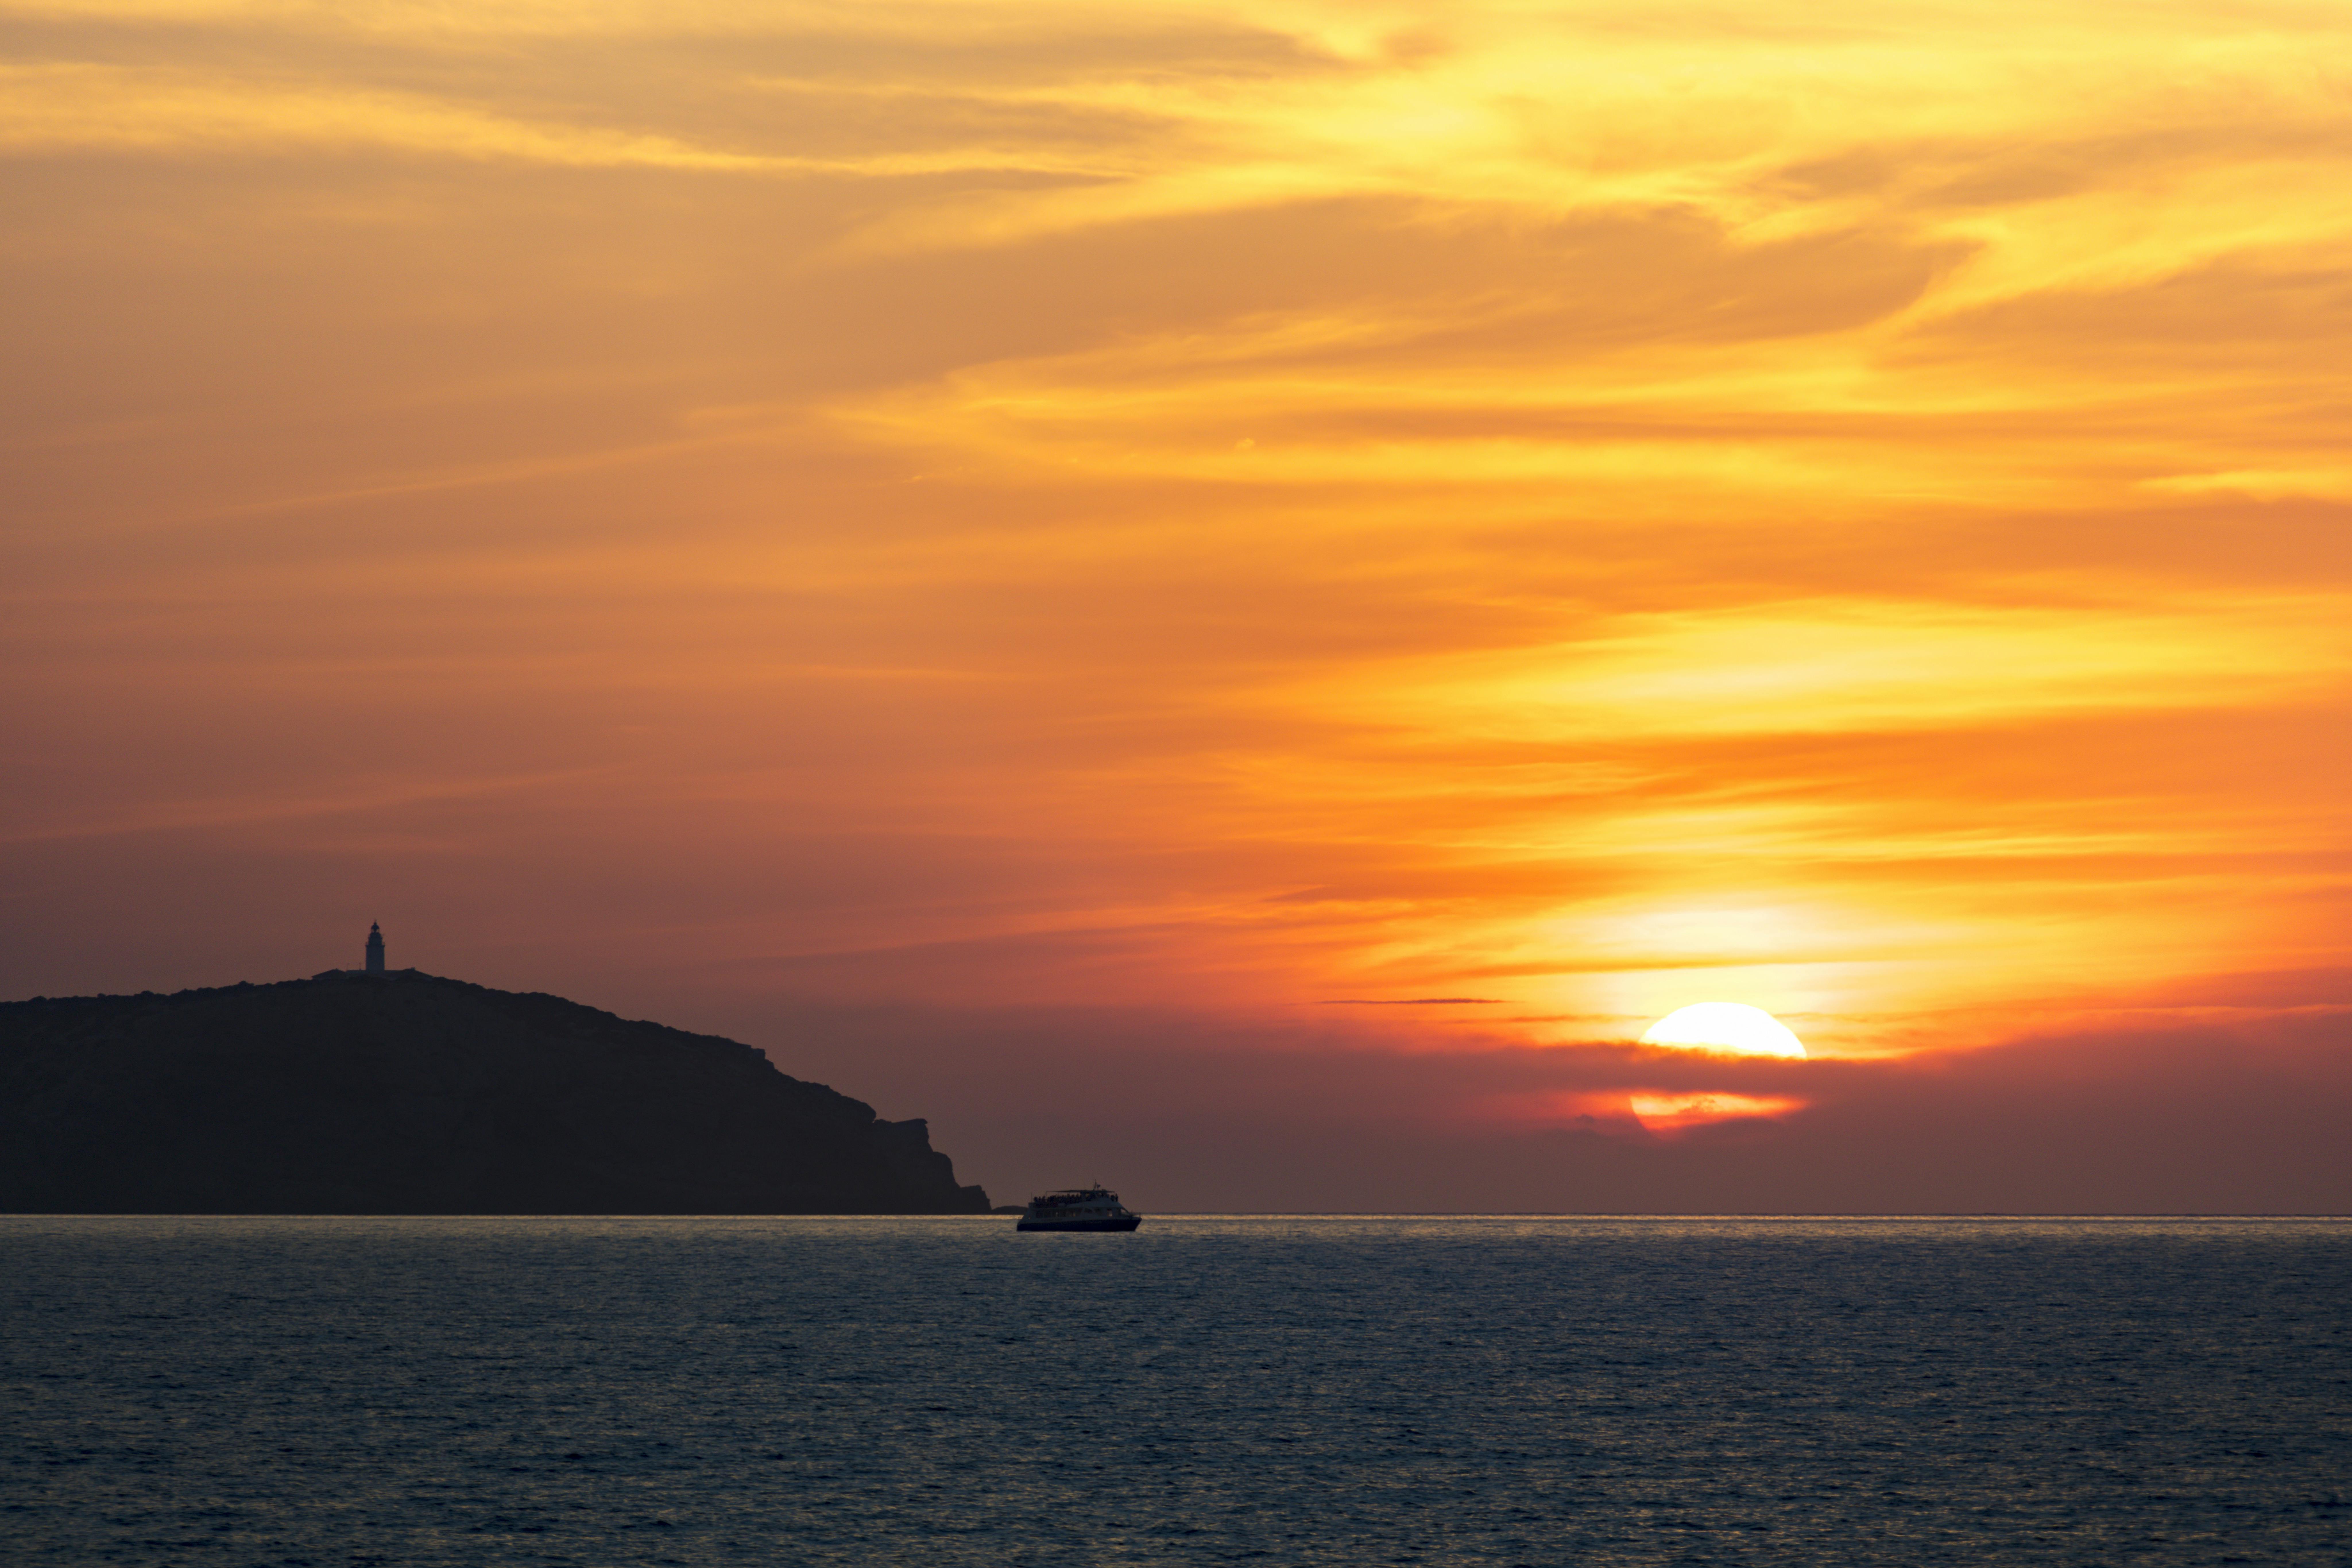 Sunset Ibiza - Without transfer